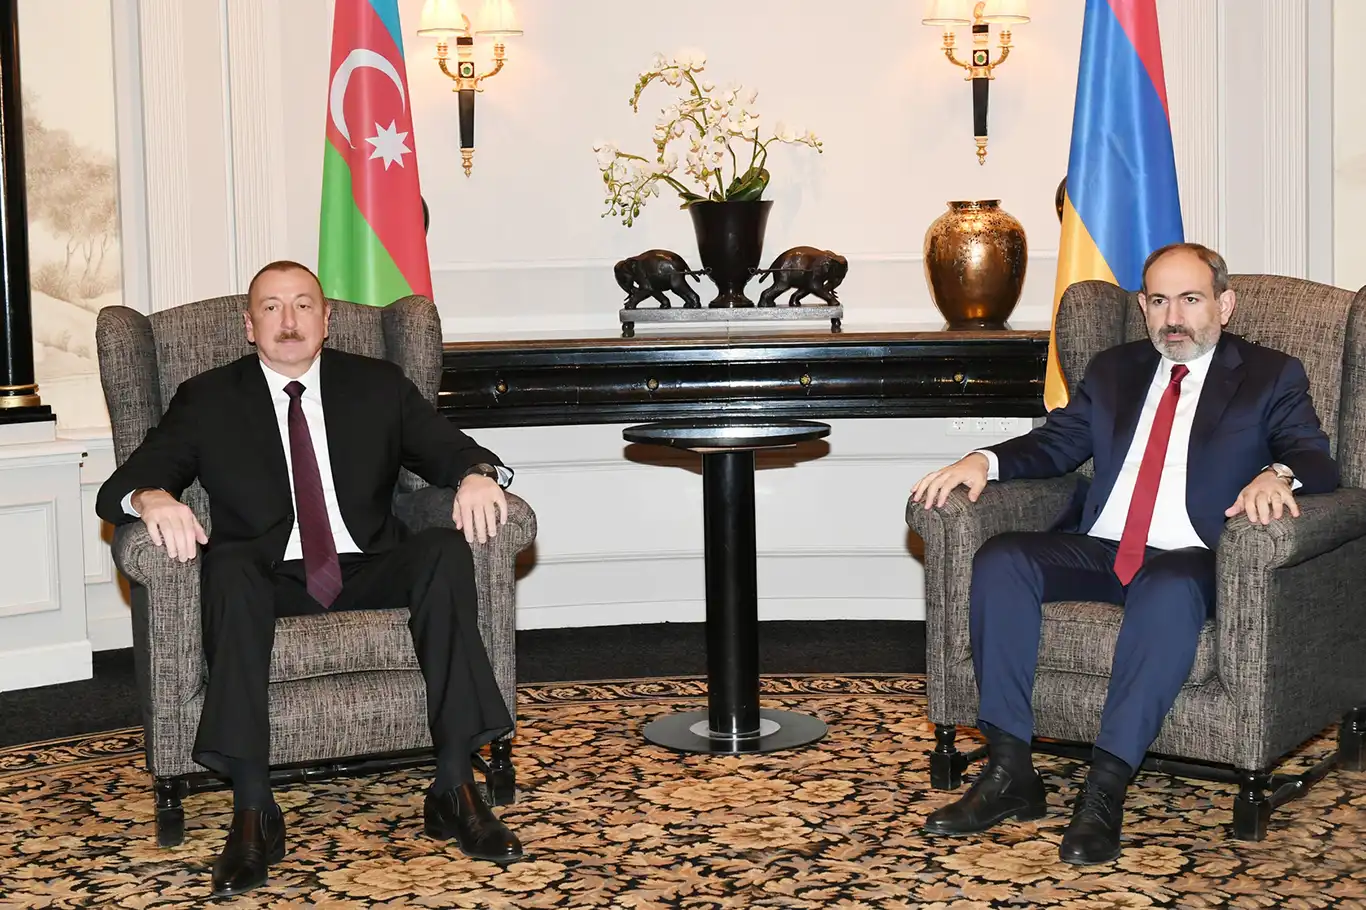 Hope rekindled for Armenia-Azerbaijan peace as leaders meet in Munich